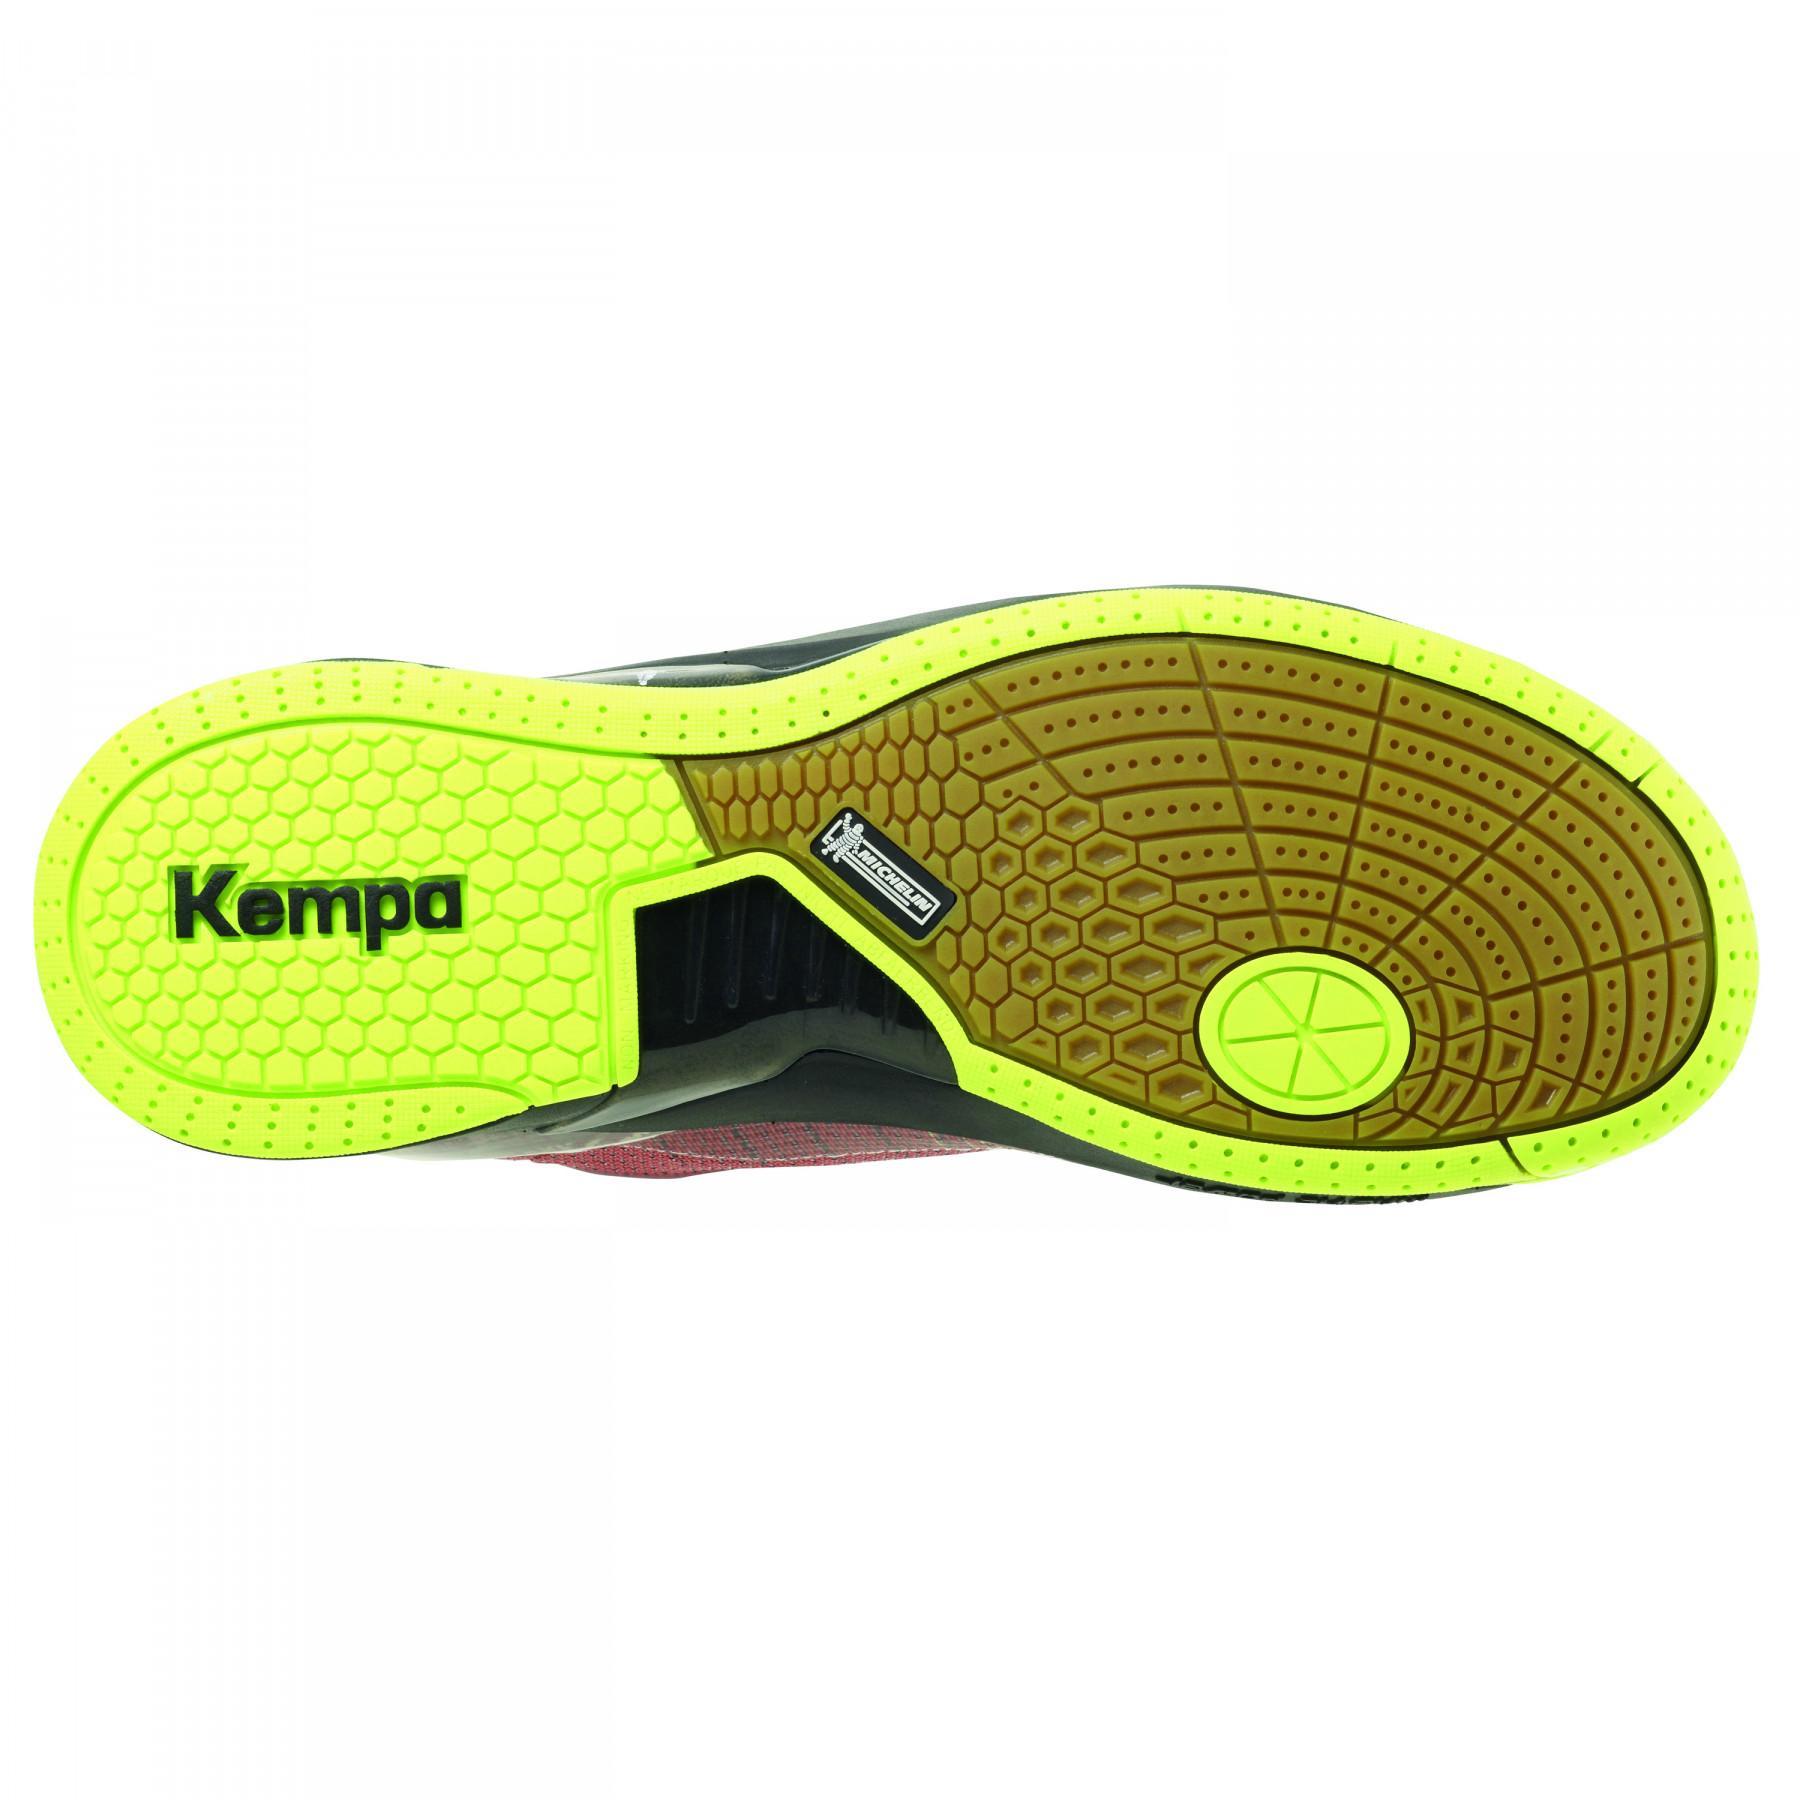 Sapatos Kempa Attack Two Contender